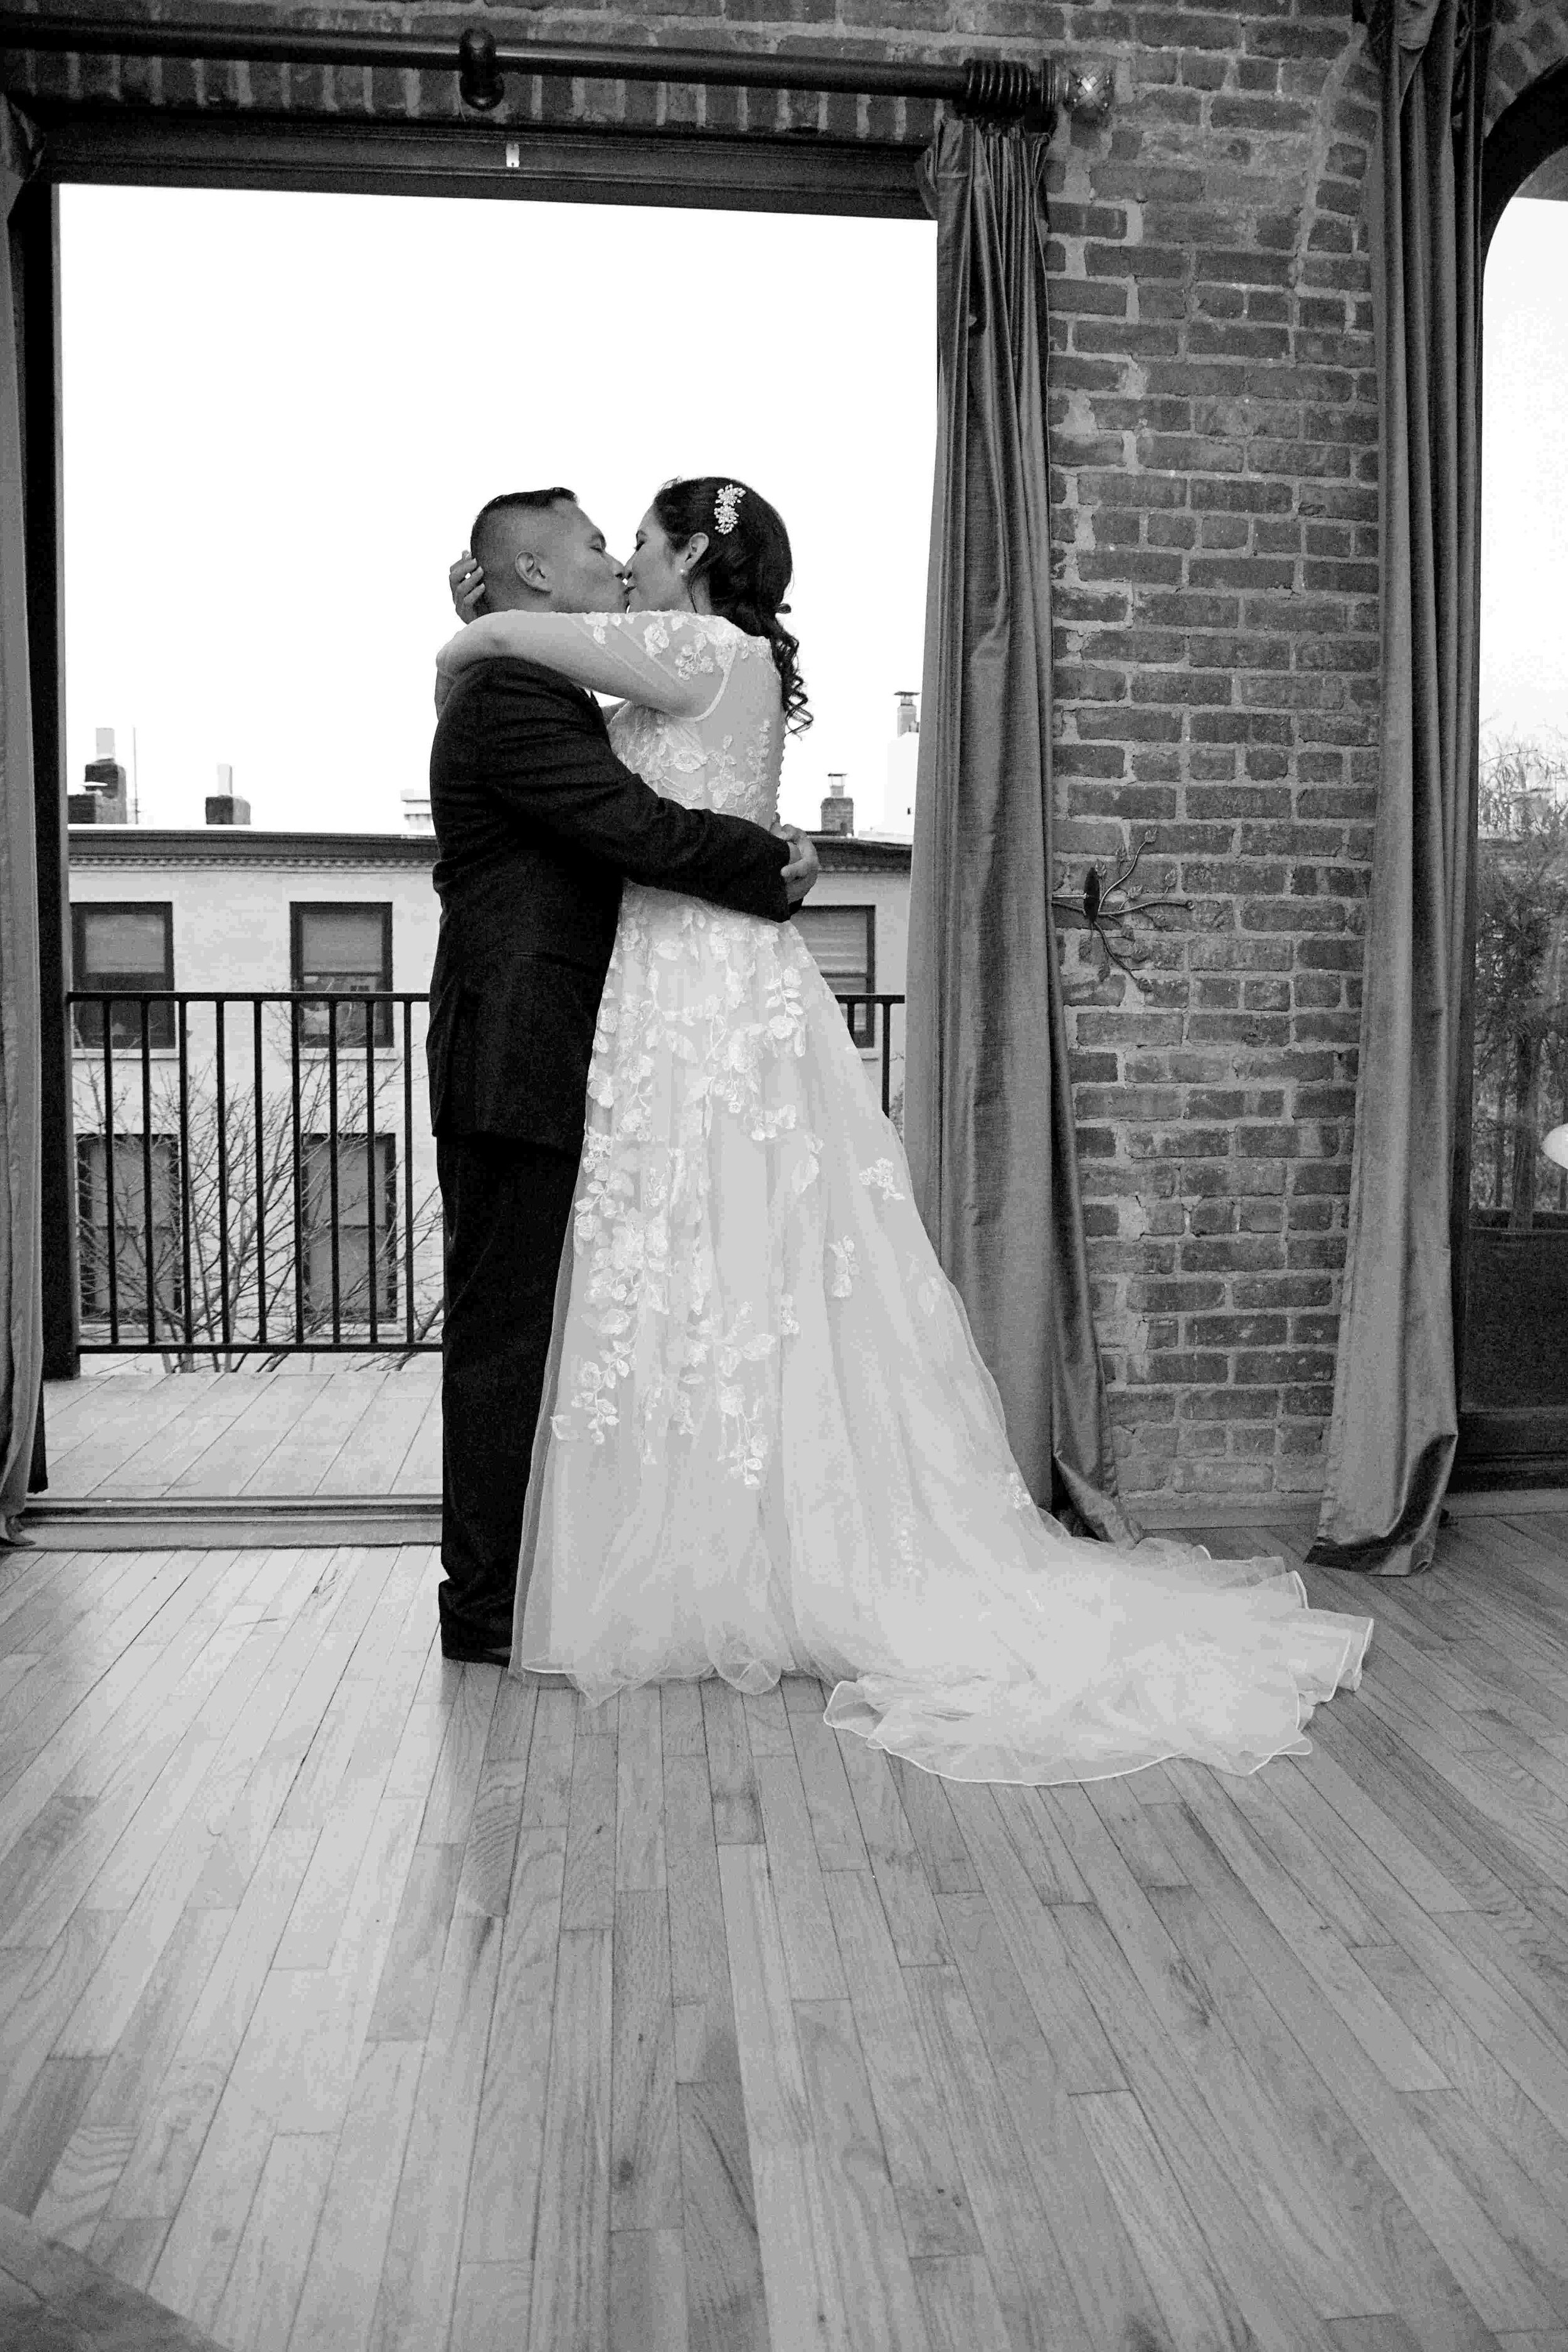  bride and groom first look wedding photography brooklyn new york 